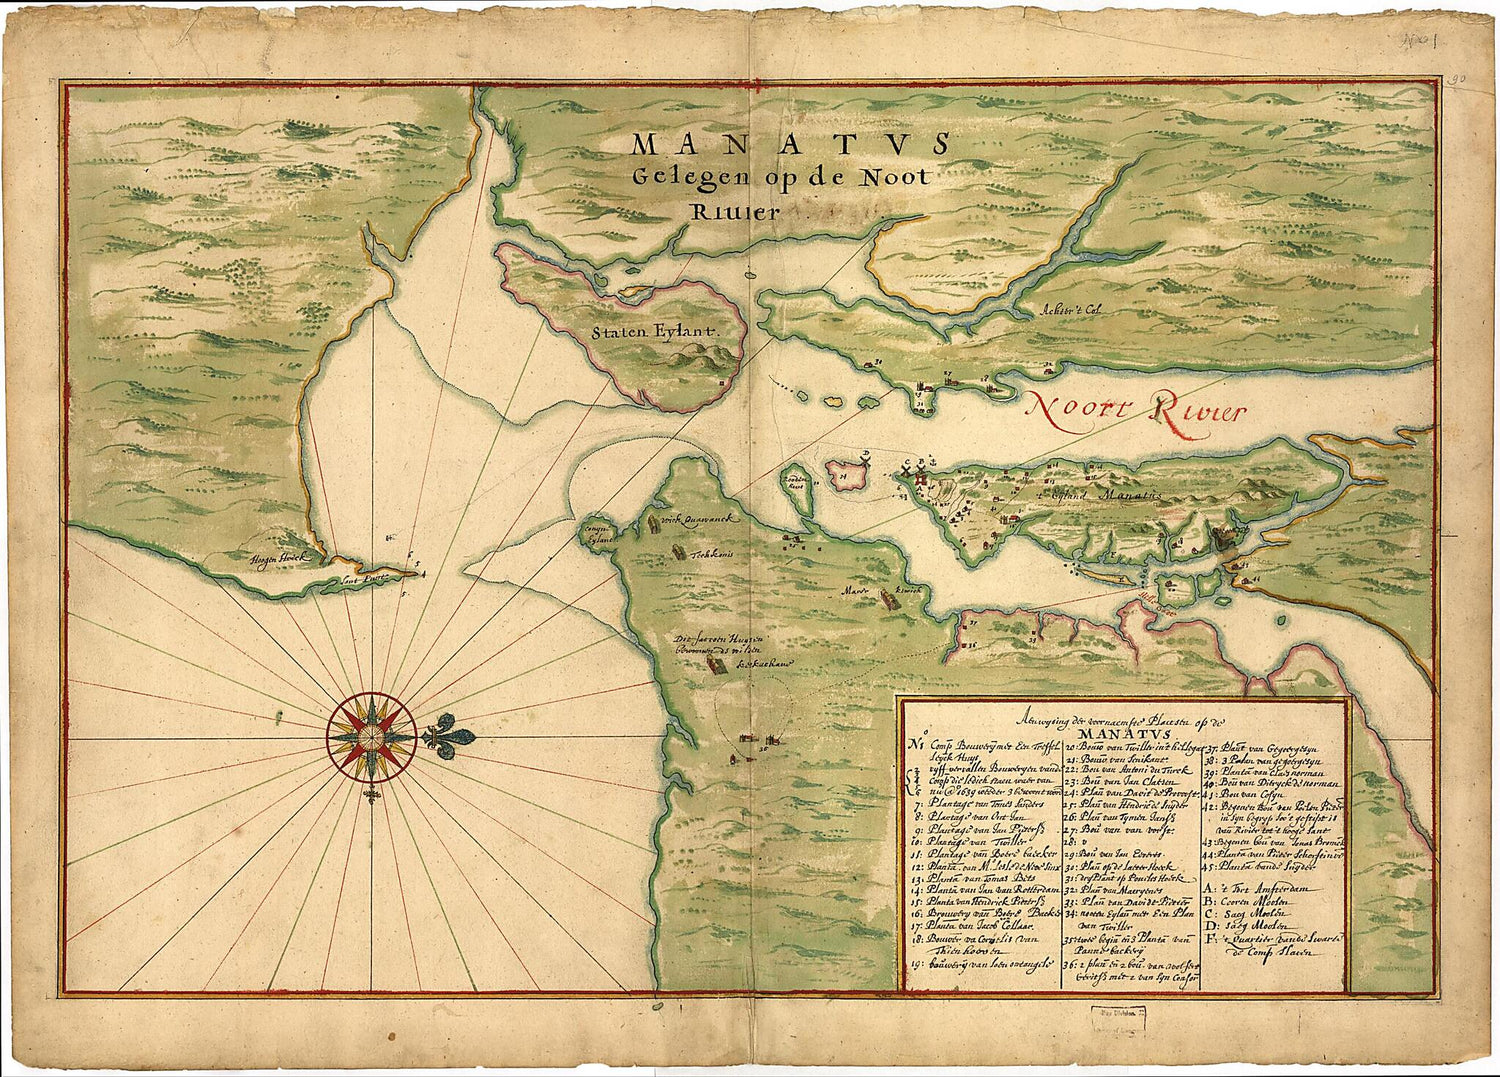 This old map of Manatvs Gelegen Op De Noot sic Riuier from 1670 was created by  Library of Congress, Joan Vinckeboons in 1670